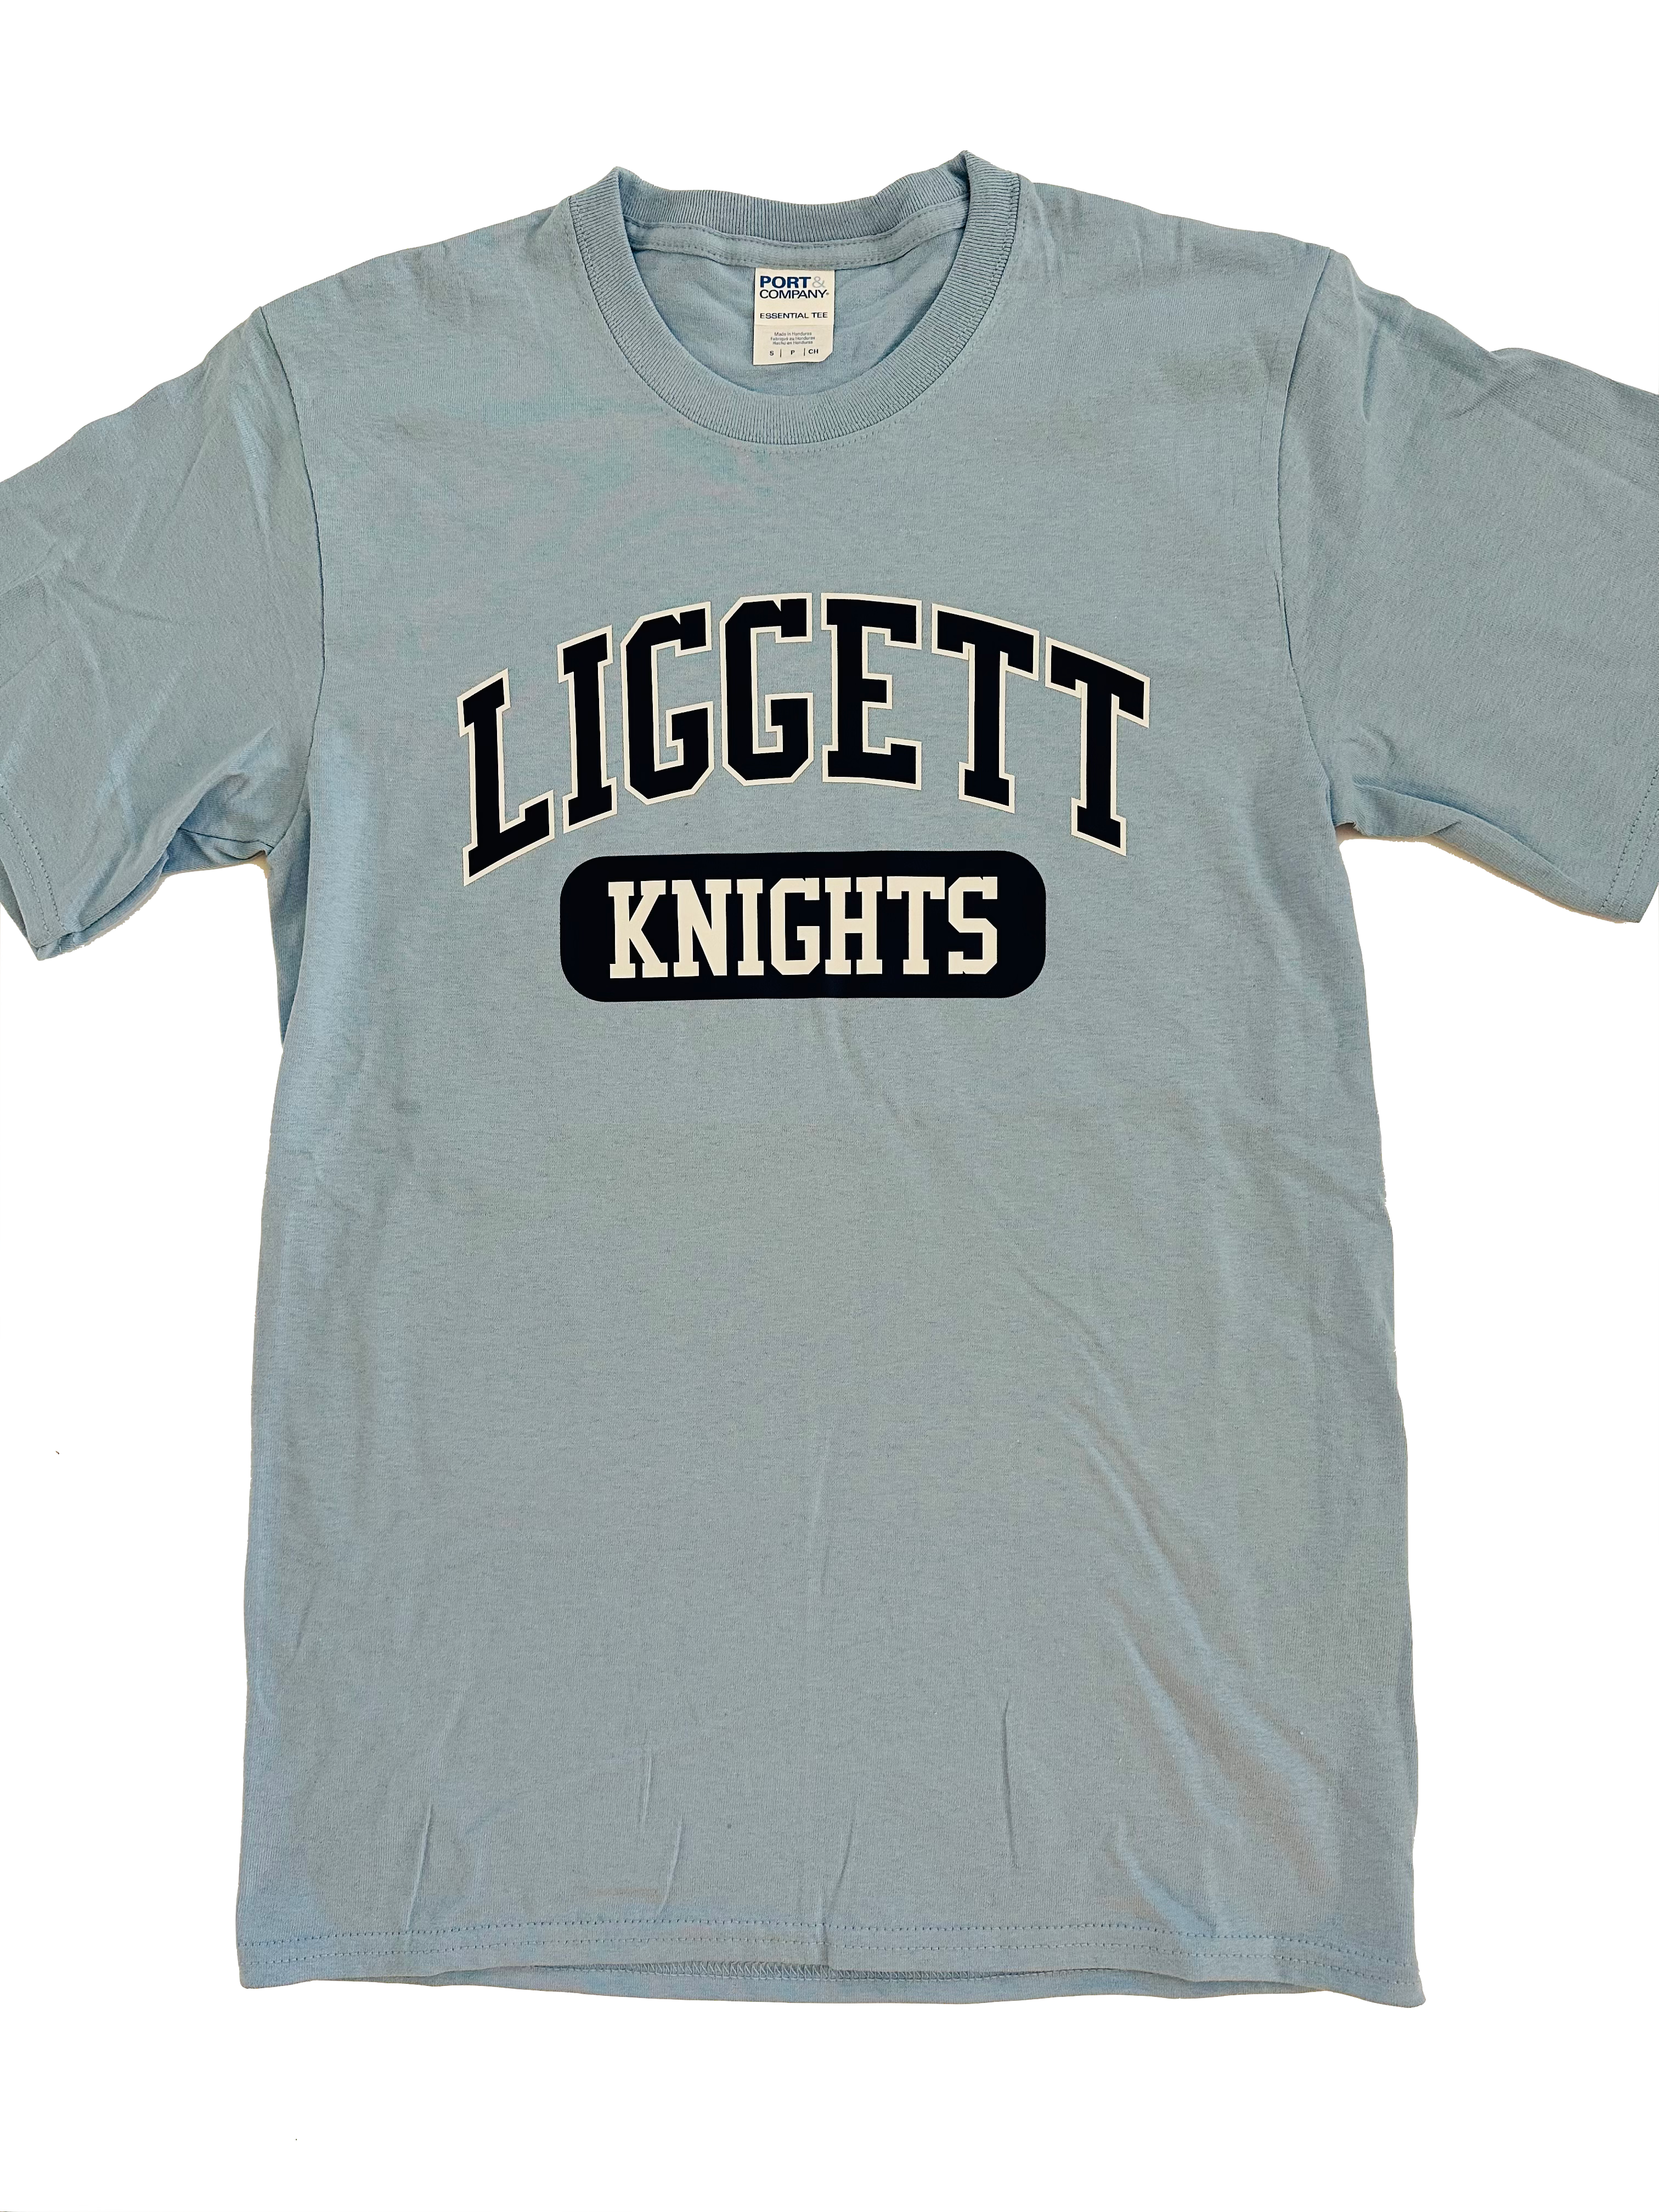 NEW Adult Light Blue Liggett Knights SS Tee